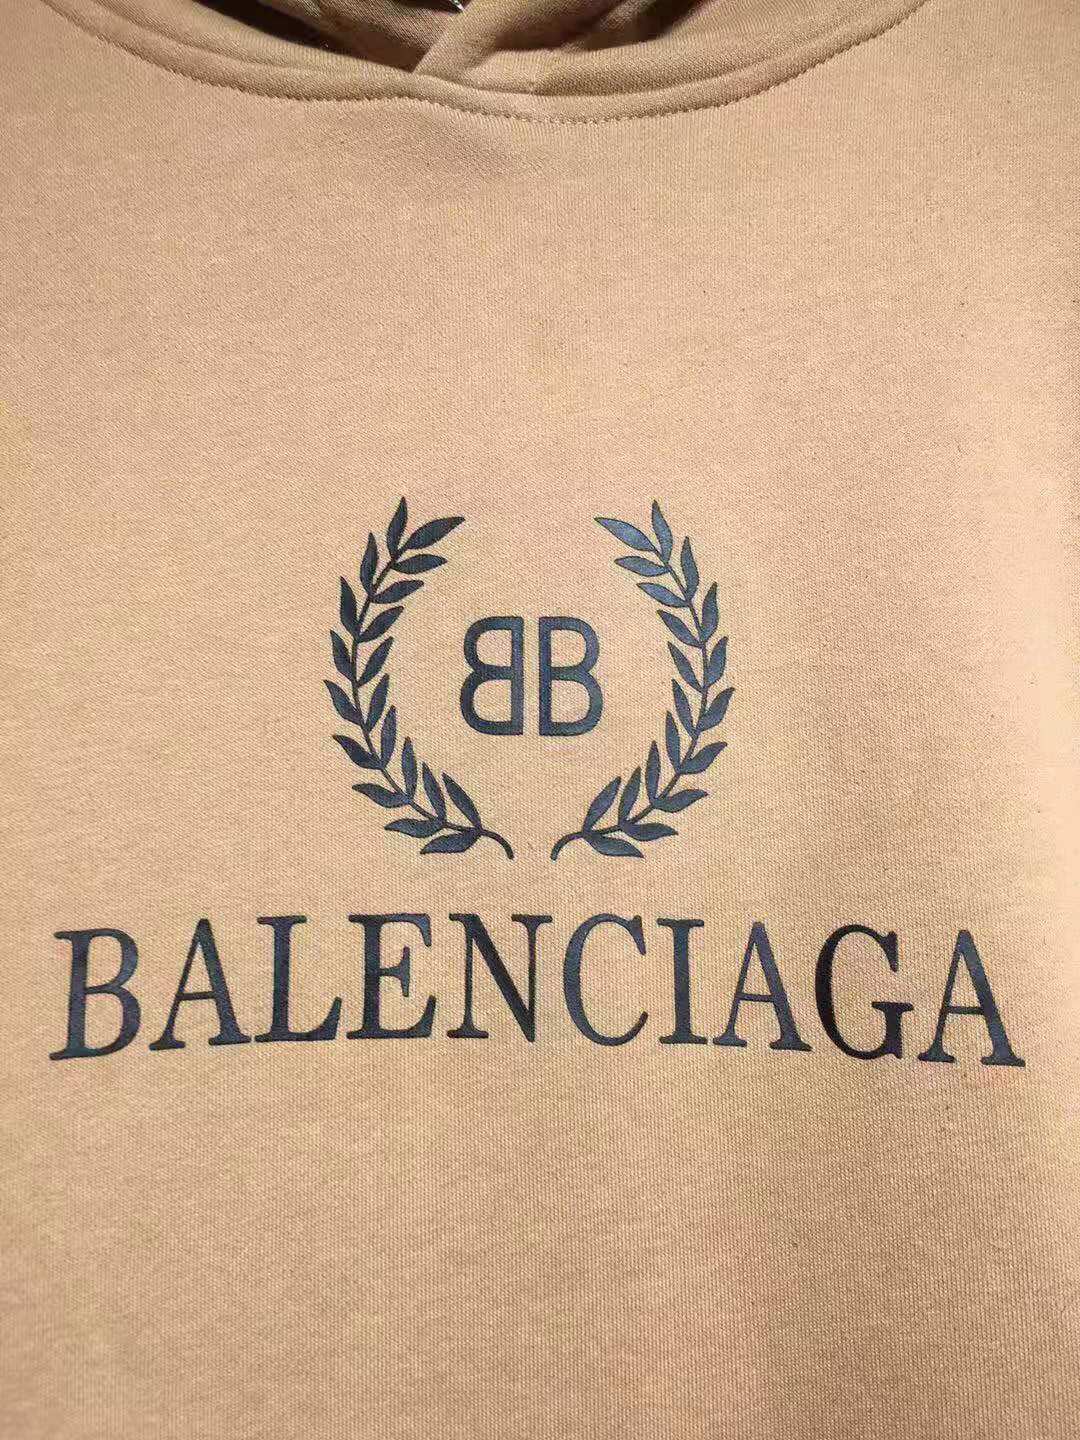 Balenciaga パーカーレディースブラントパーカー スウェット トレーナー バレンシアガプルオーバーパーカー 防寒